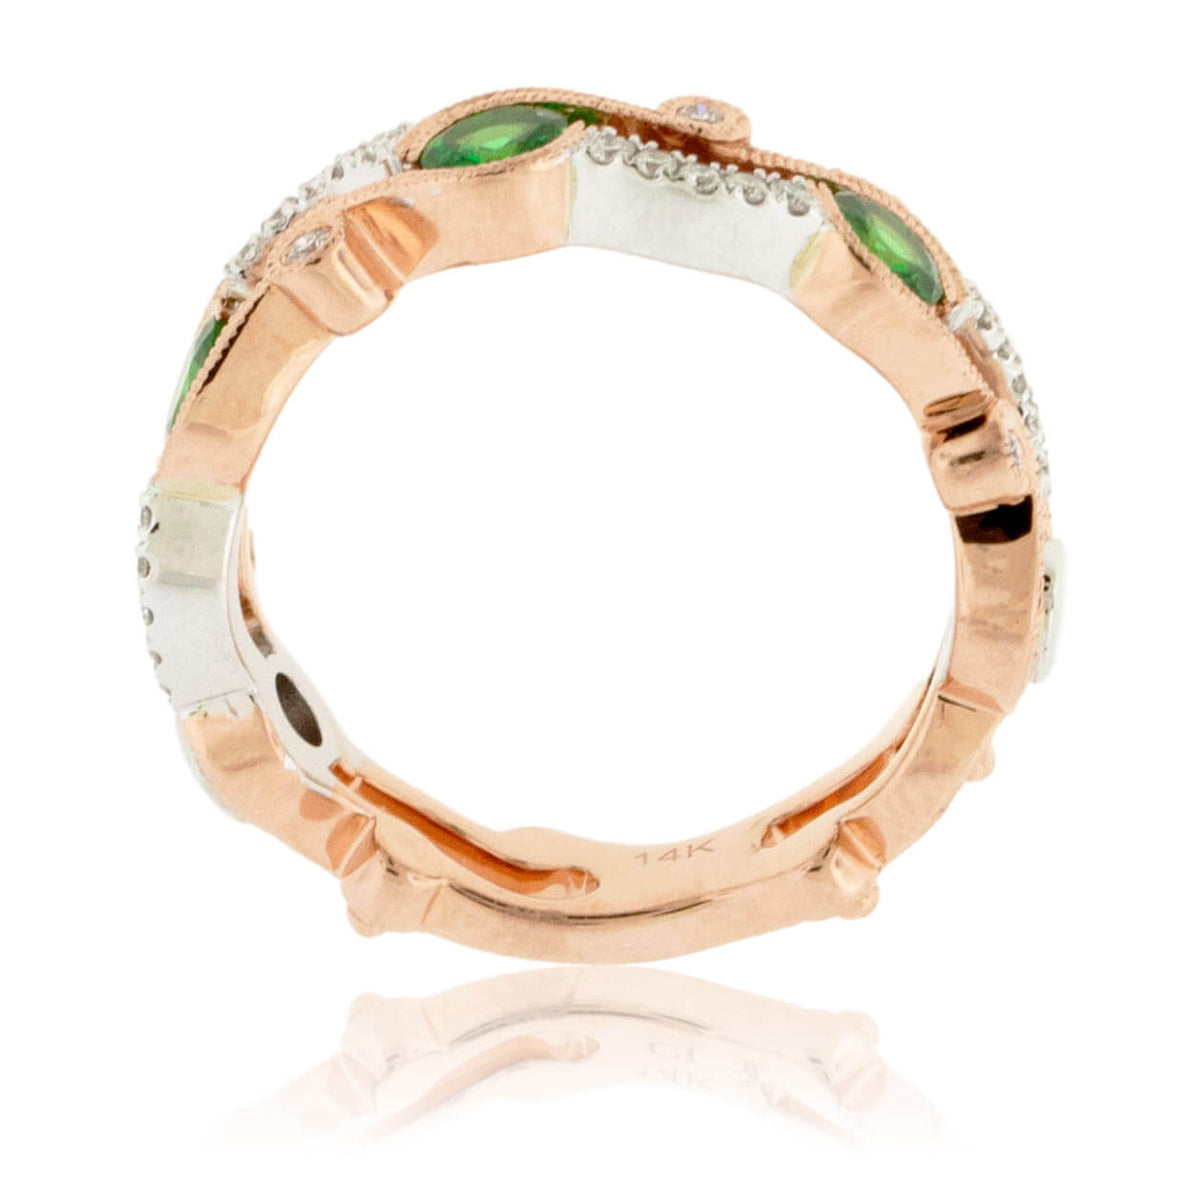 Green Tsavorite Garnet & Diamond Ring - Park City Jewelers